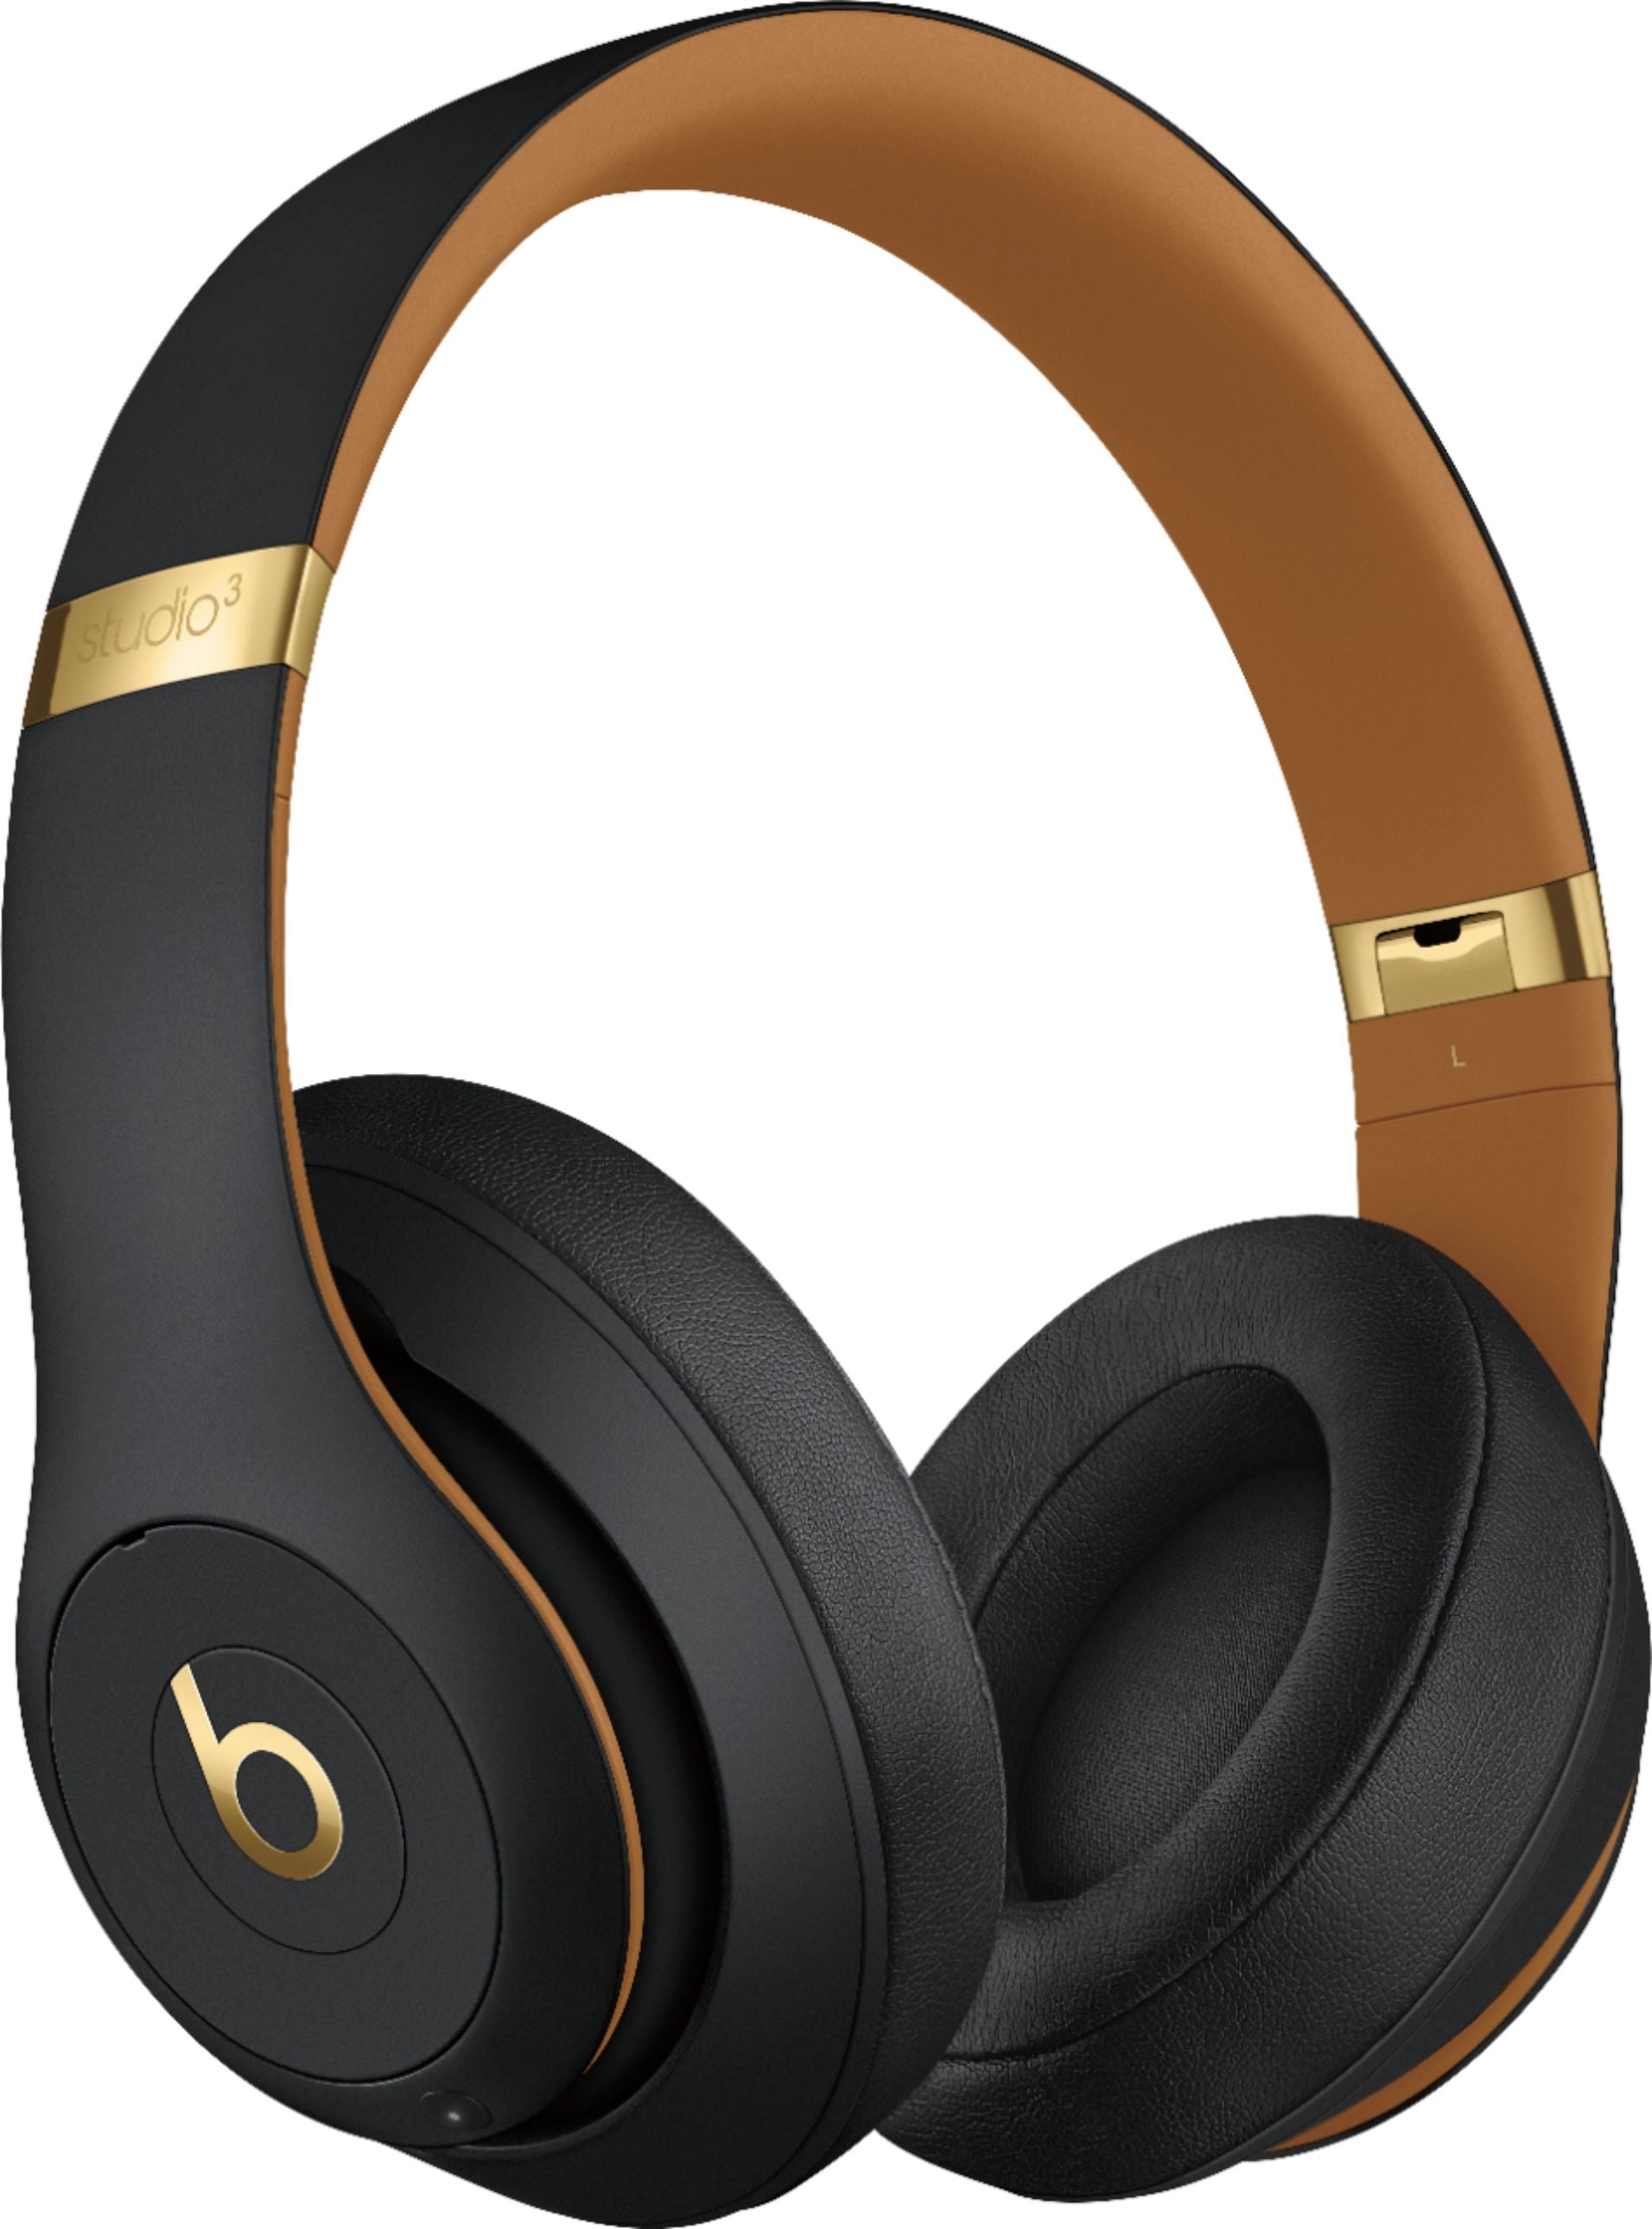 Beats Studio3 Wireless Noise Cancelling On-Ear Headphones - Midnight Black (Previous Model)